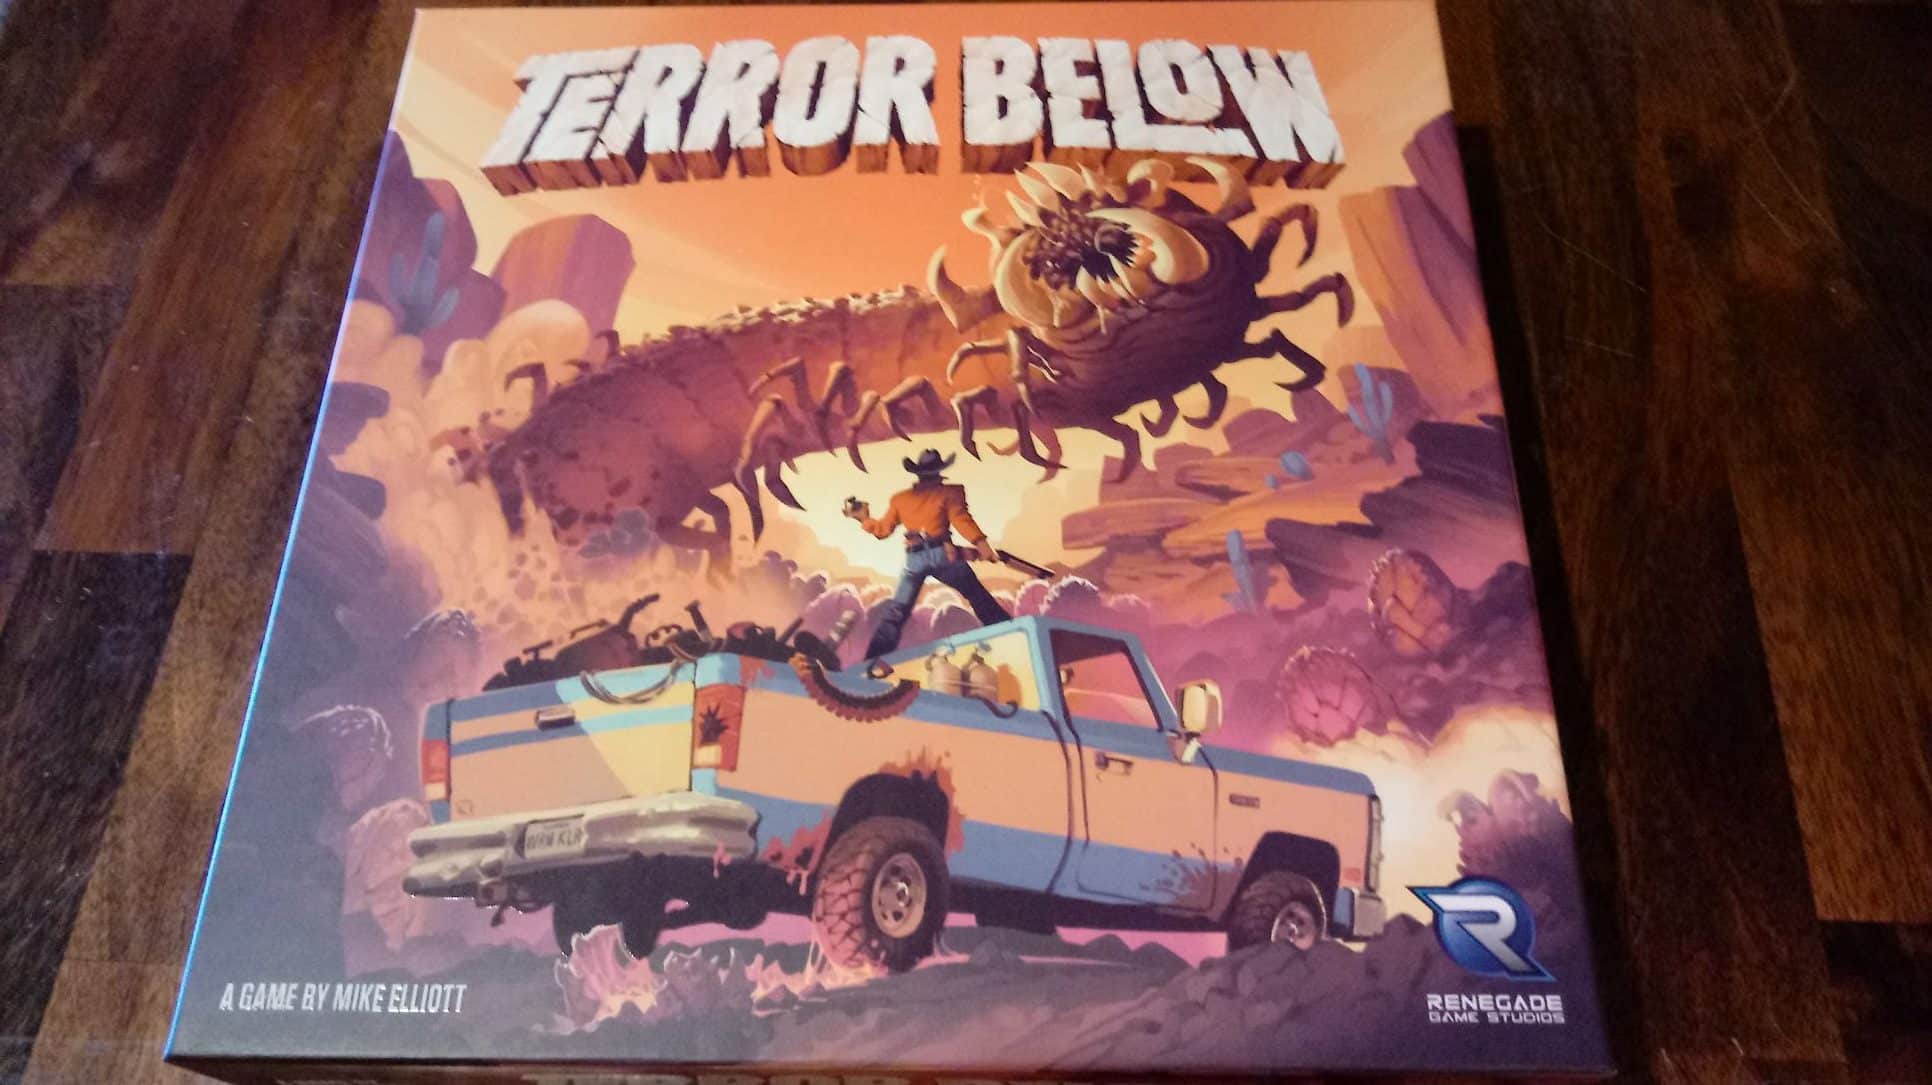 Closeup of the Terror Below box cover.